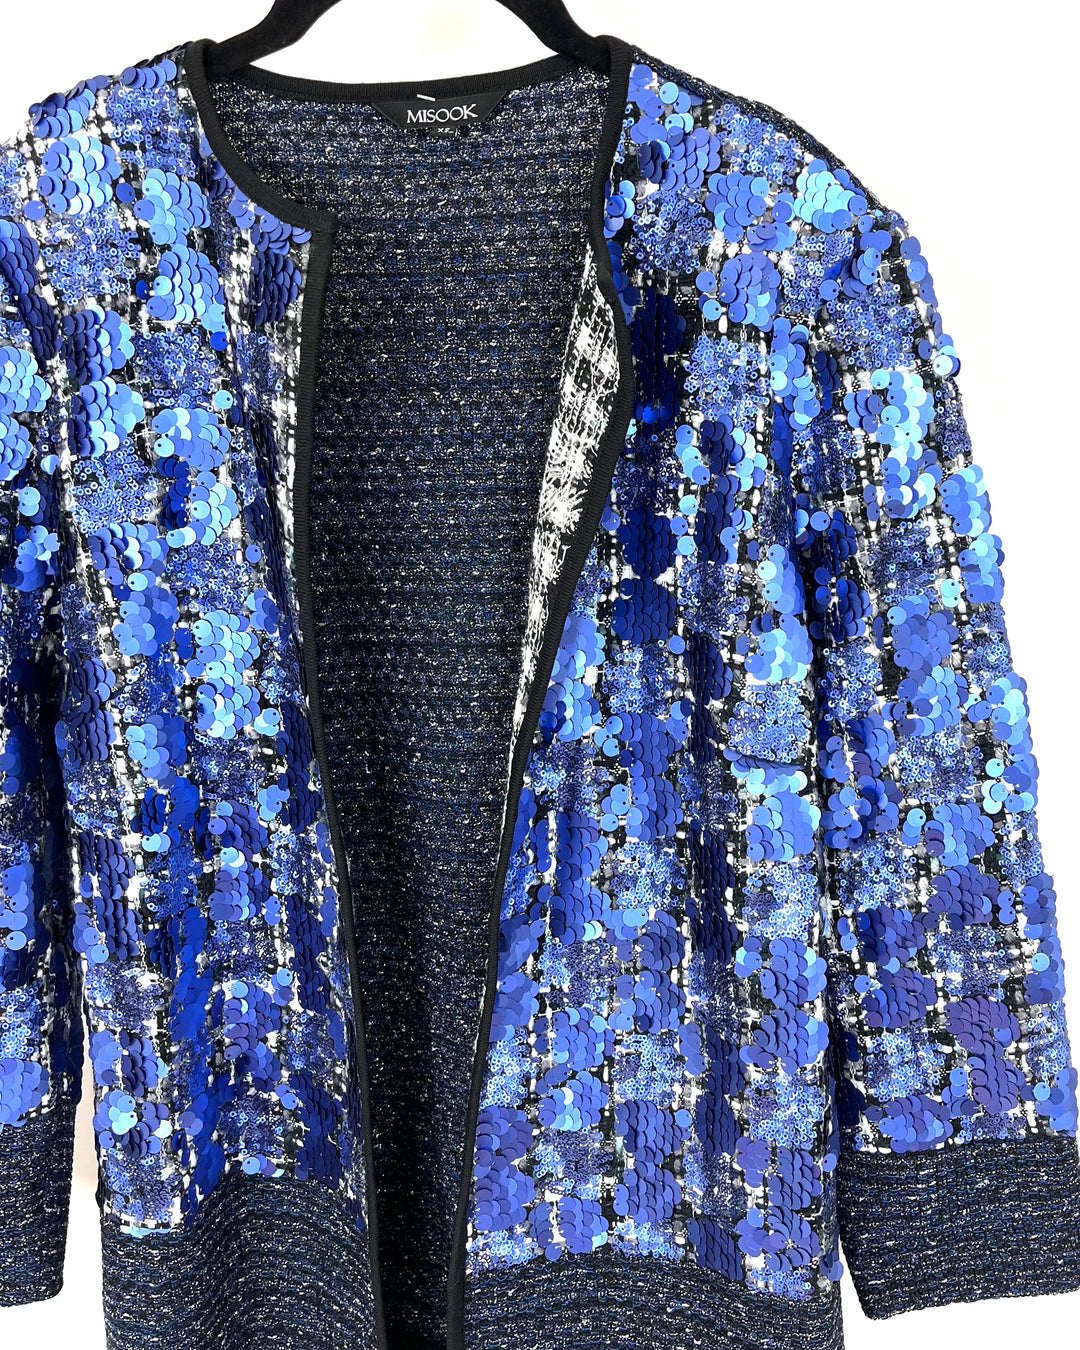 Blue Sequin Jacket - Size 2-4